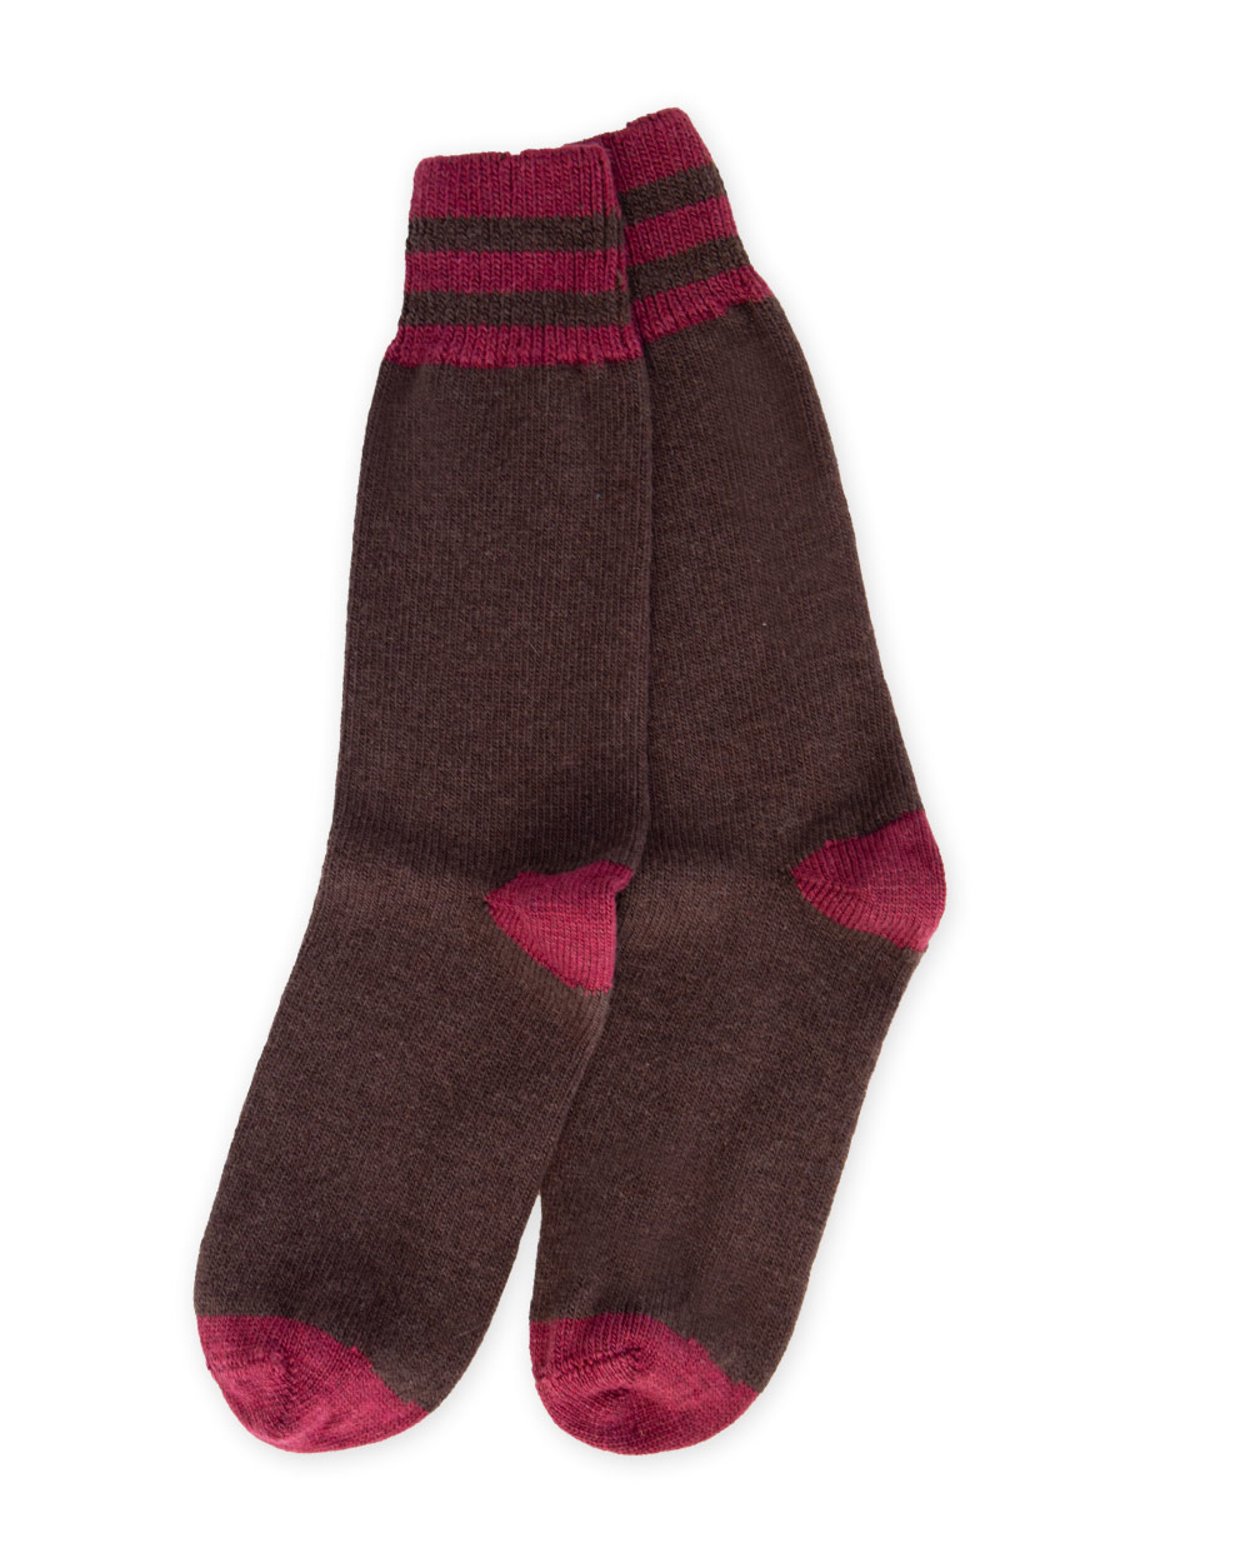 Cashmere Blend Men's Socks